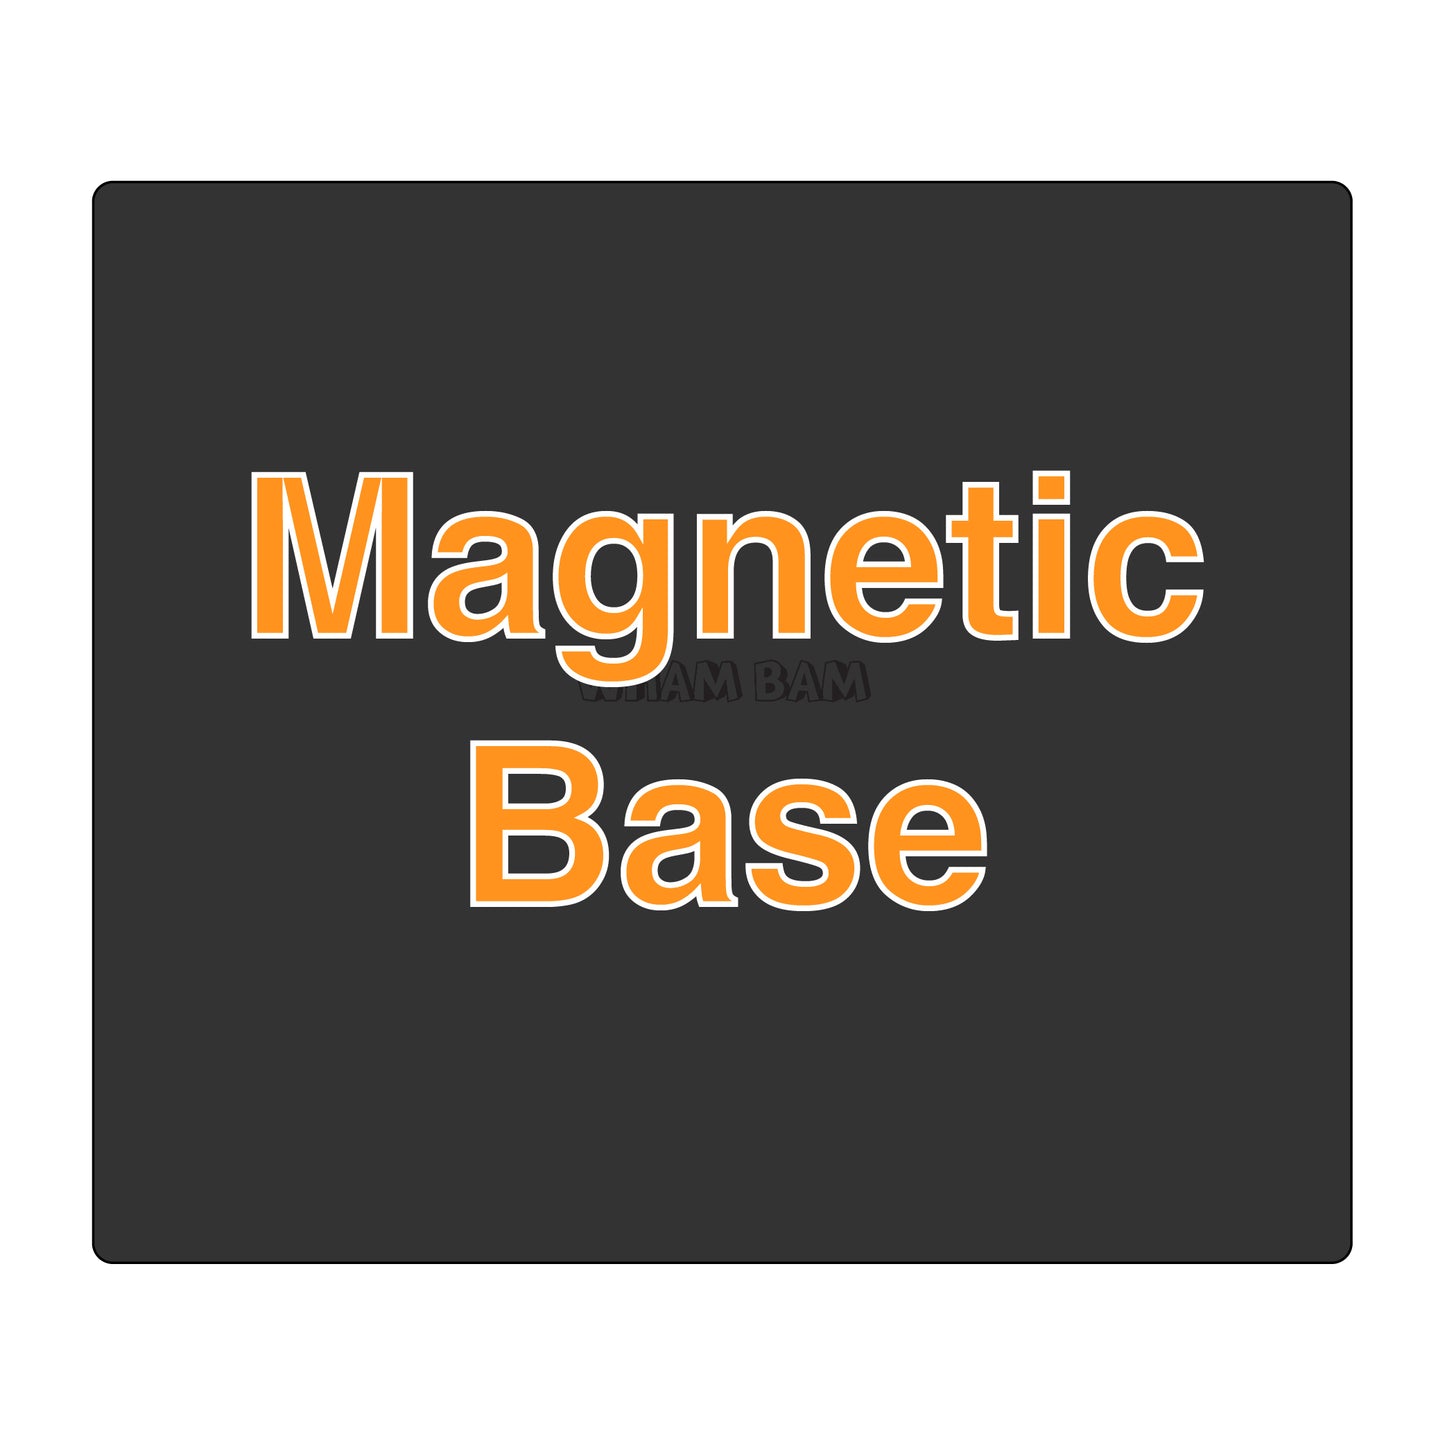 Magnetic Base - 355 x 275 - Ultimaker S5